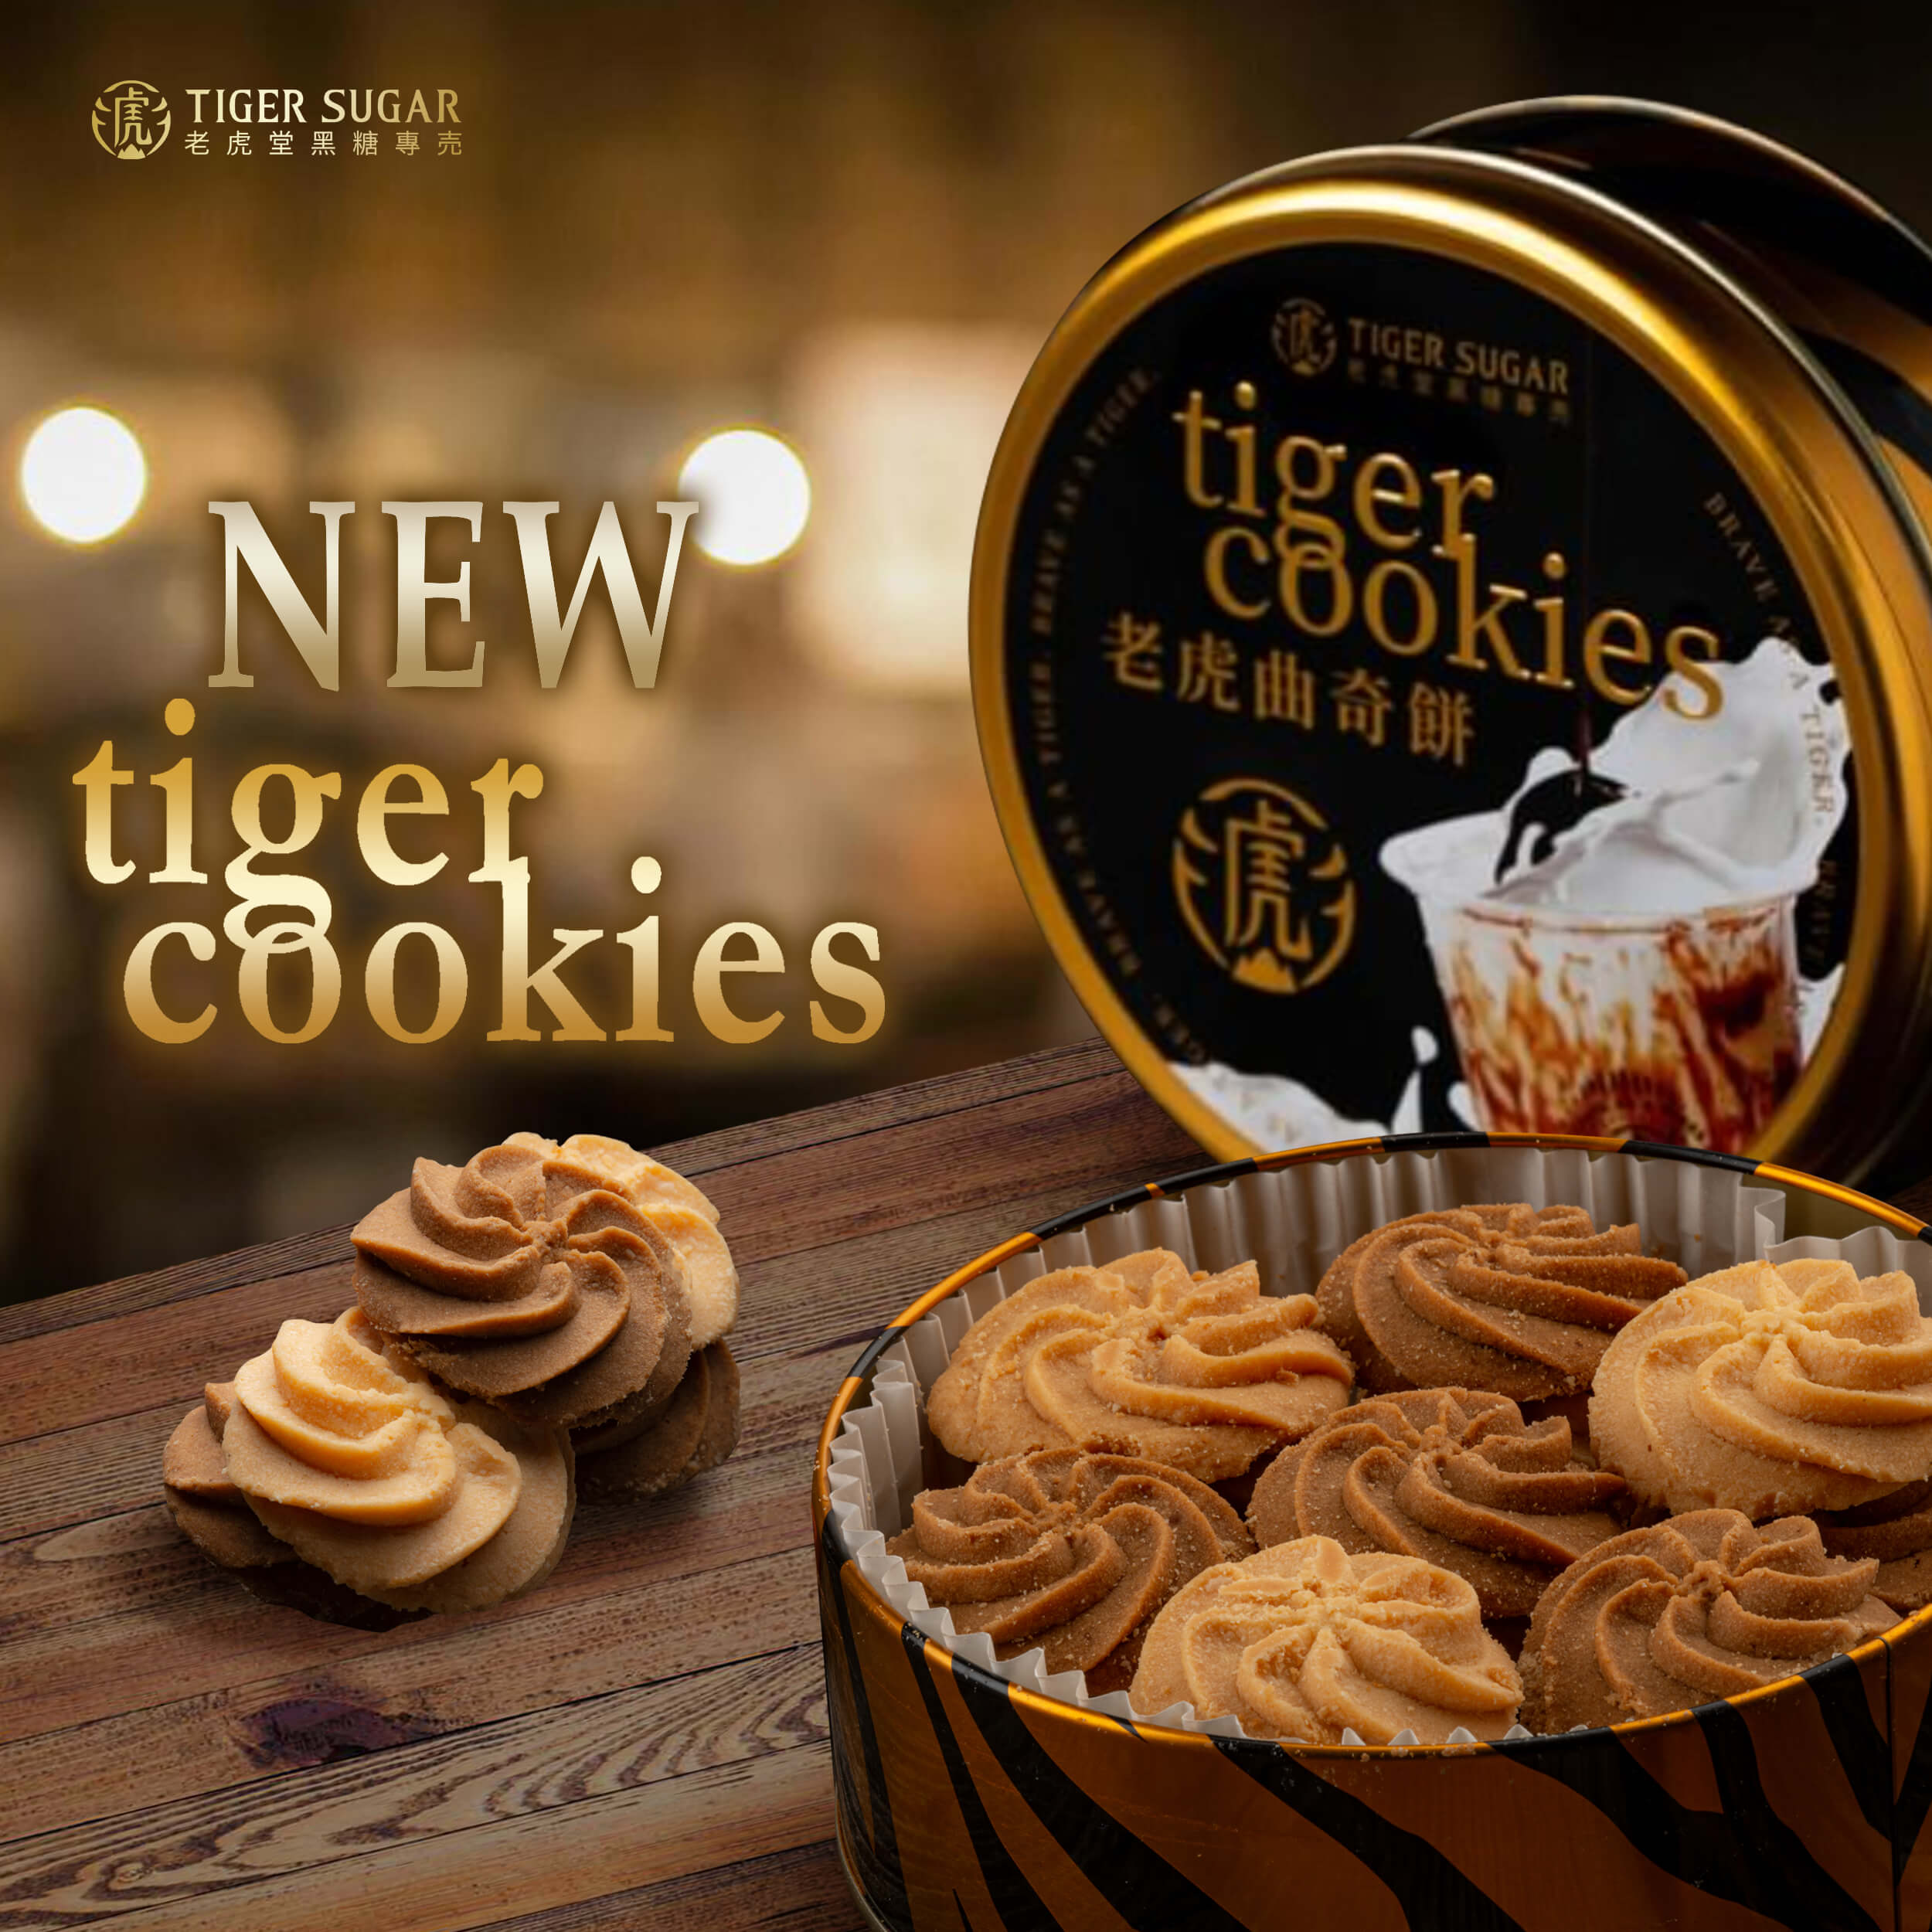 Tiger Sugar Cookies